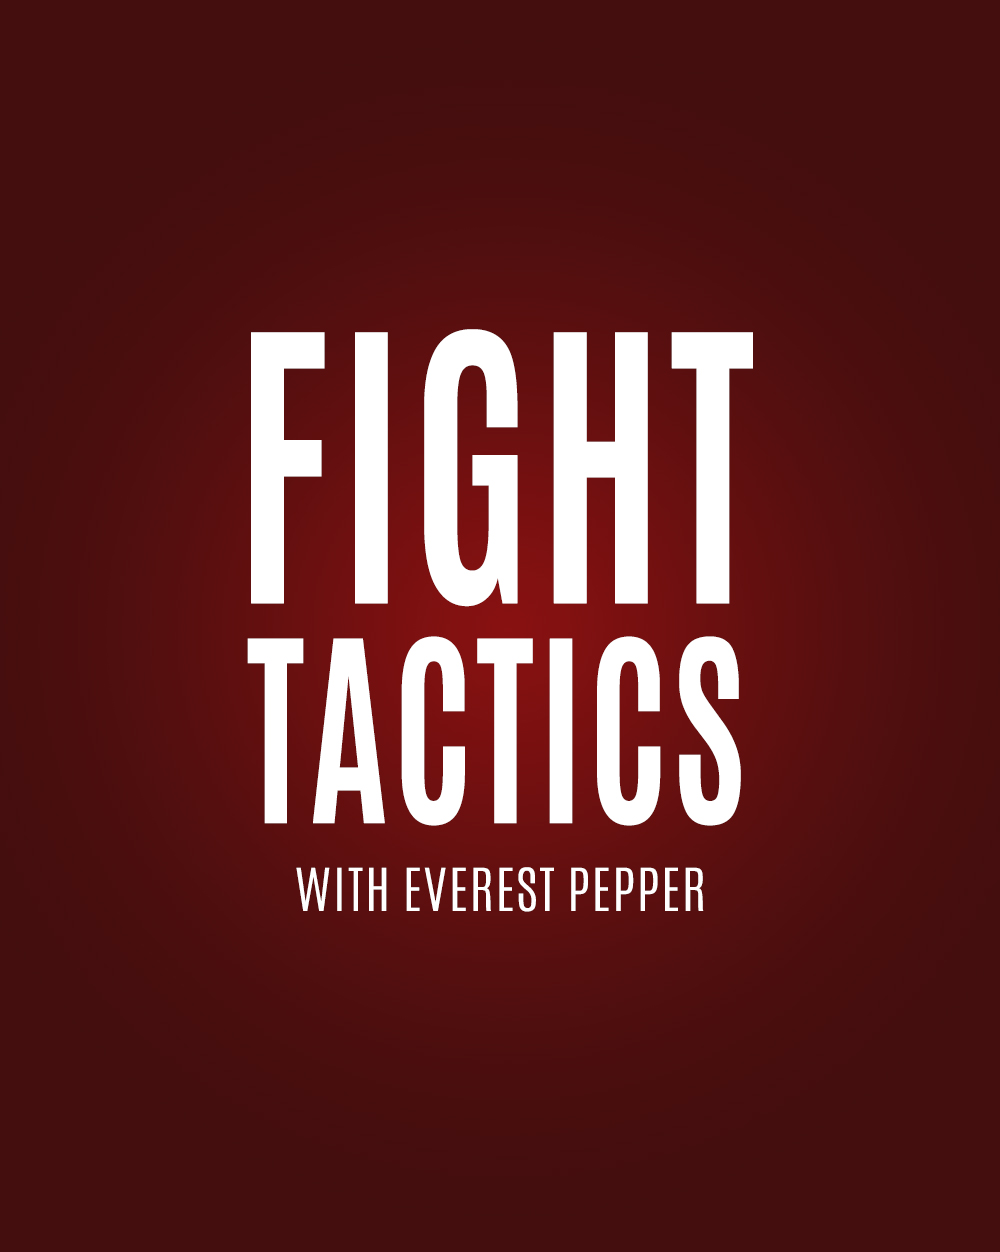 event-fighttactics